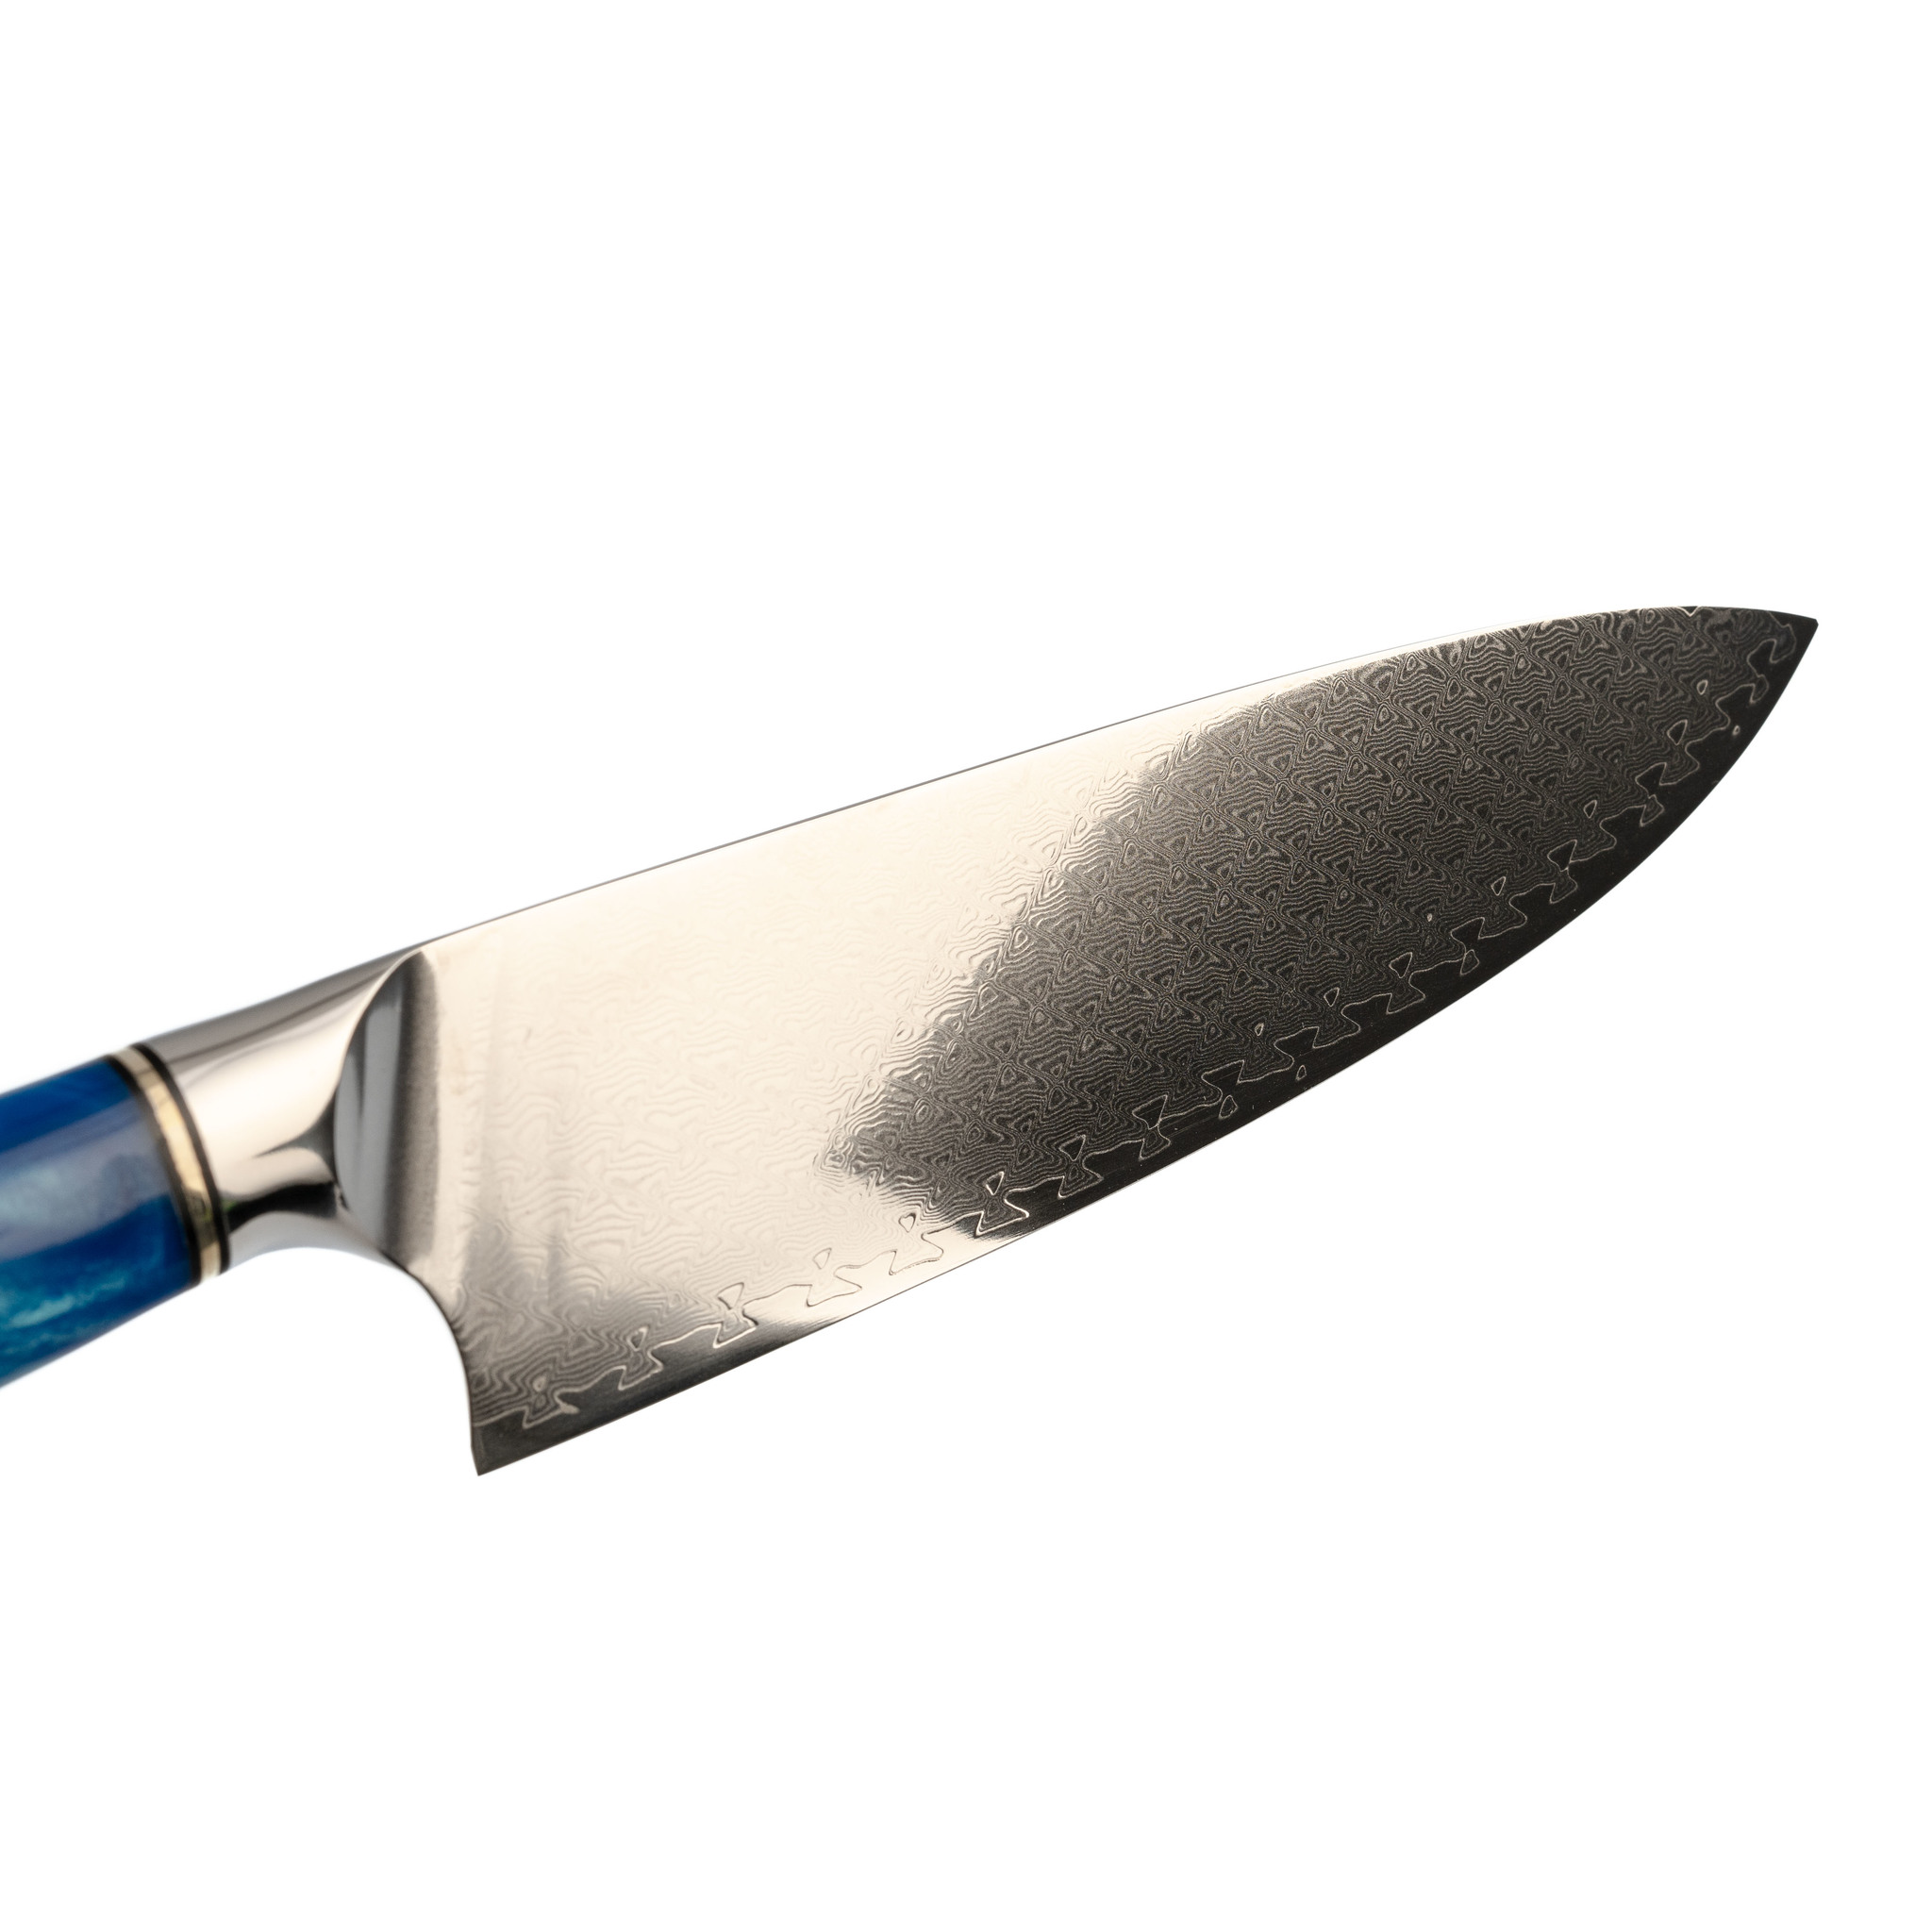 Кухонный шеф нож (Гуйто) Tuotown SG-001, сталь VG-10, рукоять дерево/эпоксидка - фото 4